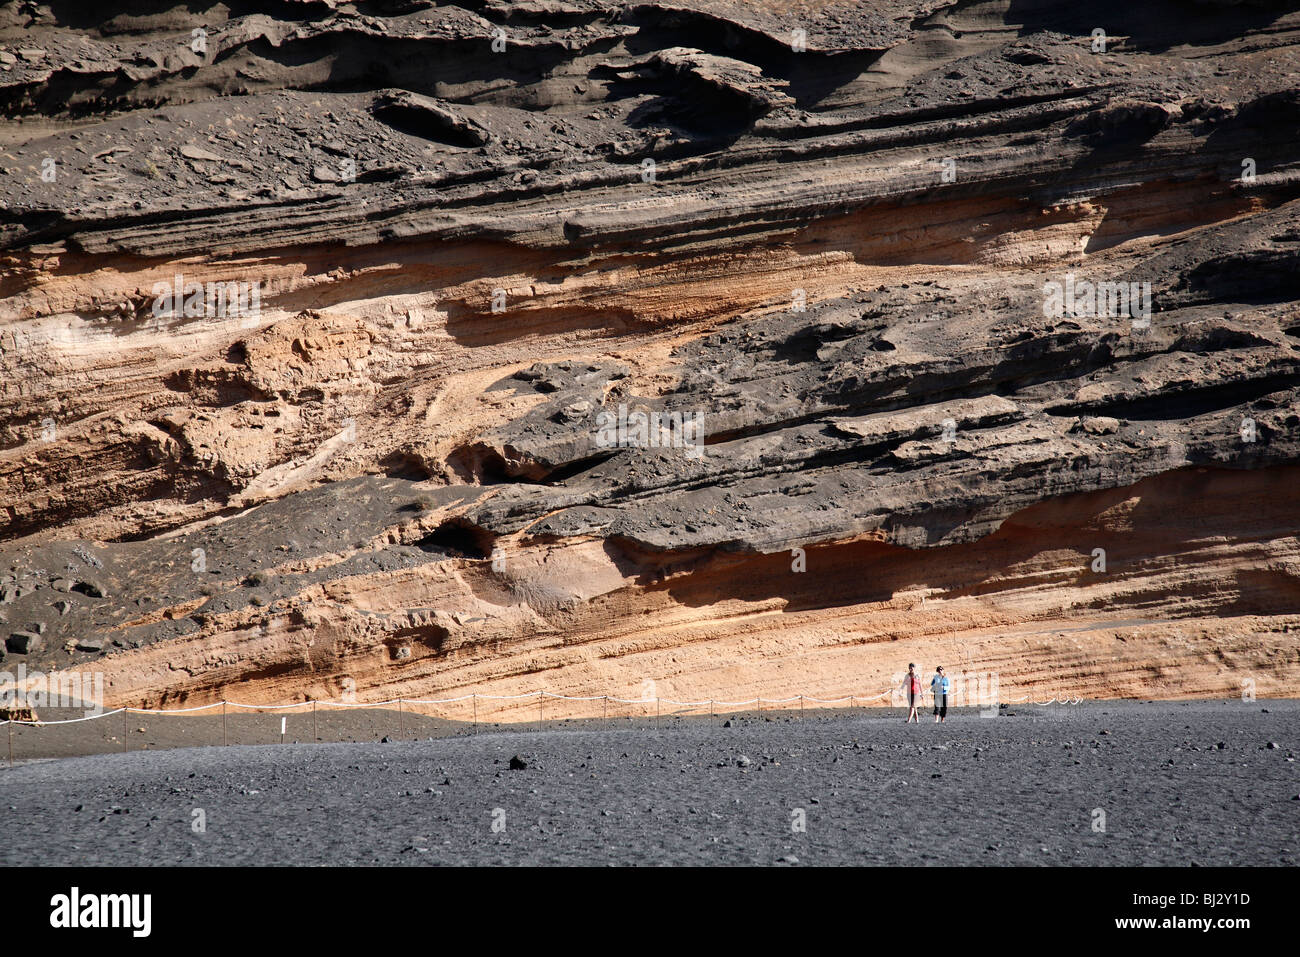 Tourists walking along rock face near Charco de los Clicos at El Golfo, Lanzarote, Canary Islands, Spain Stock Photo